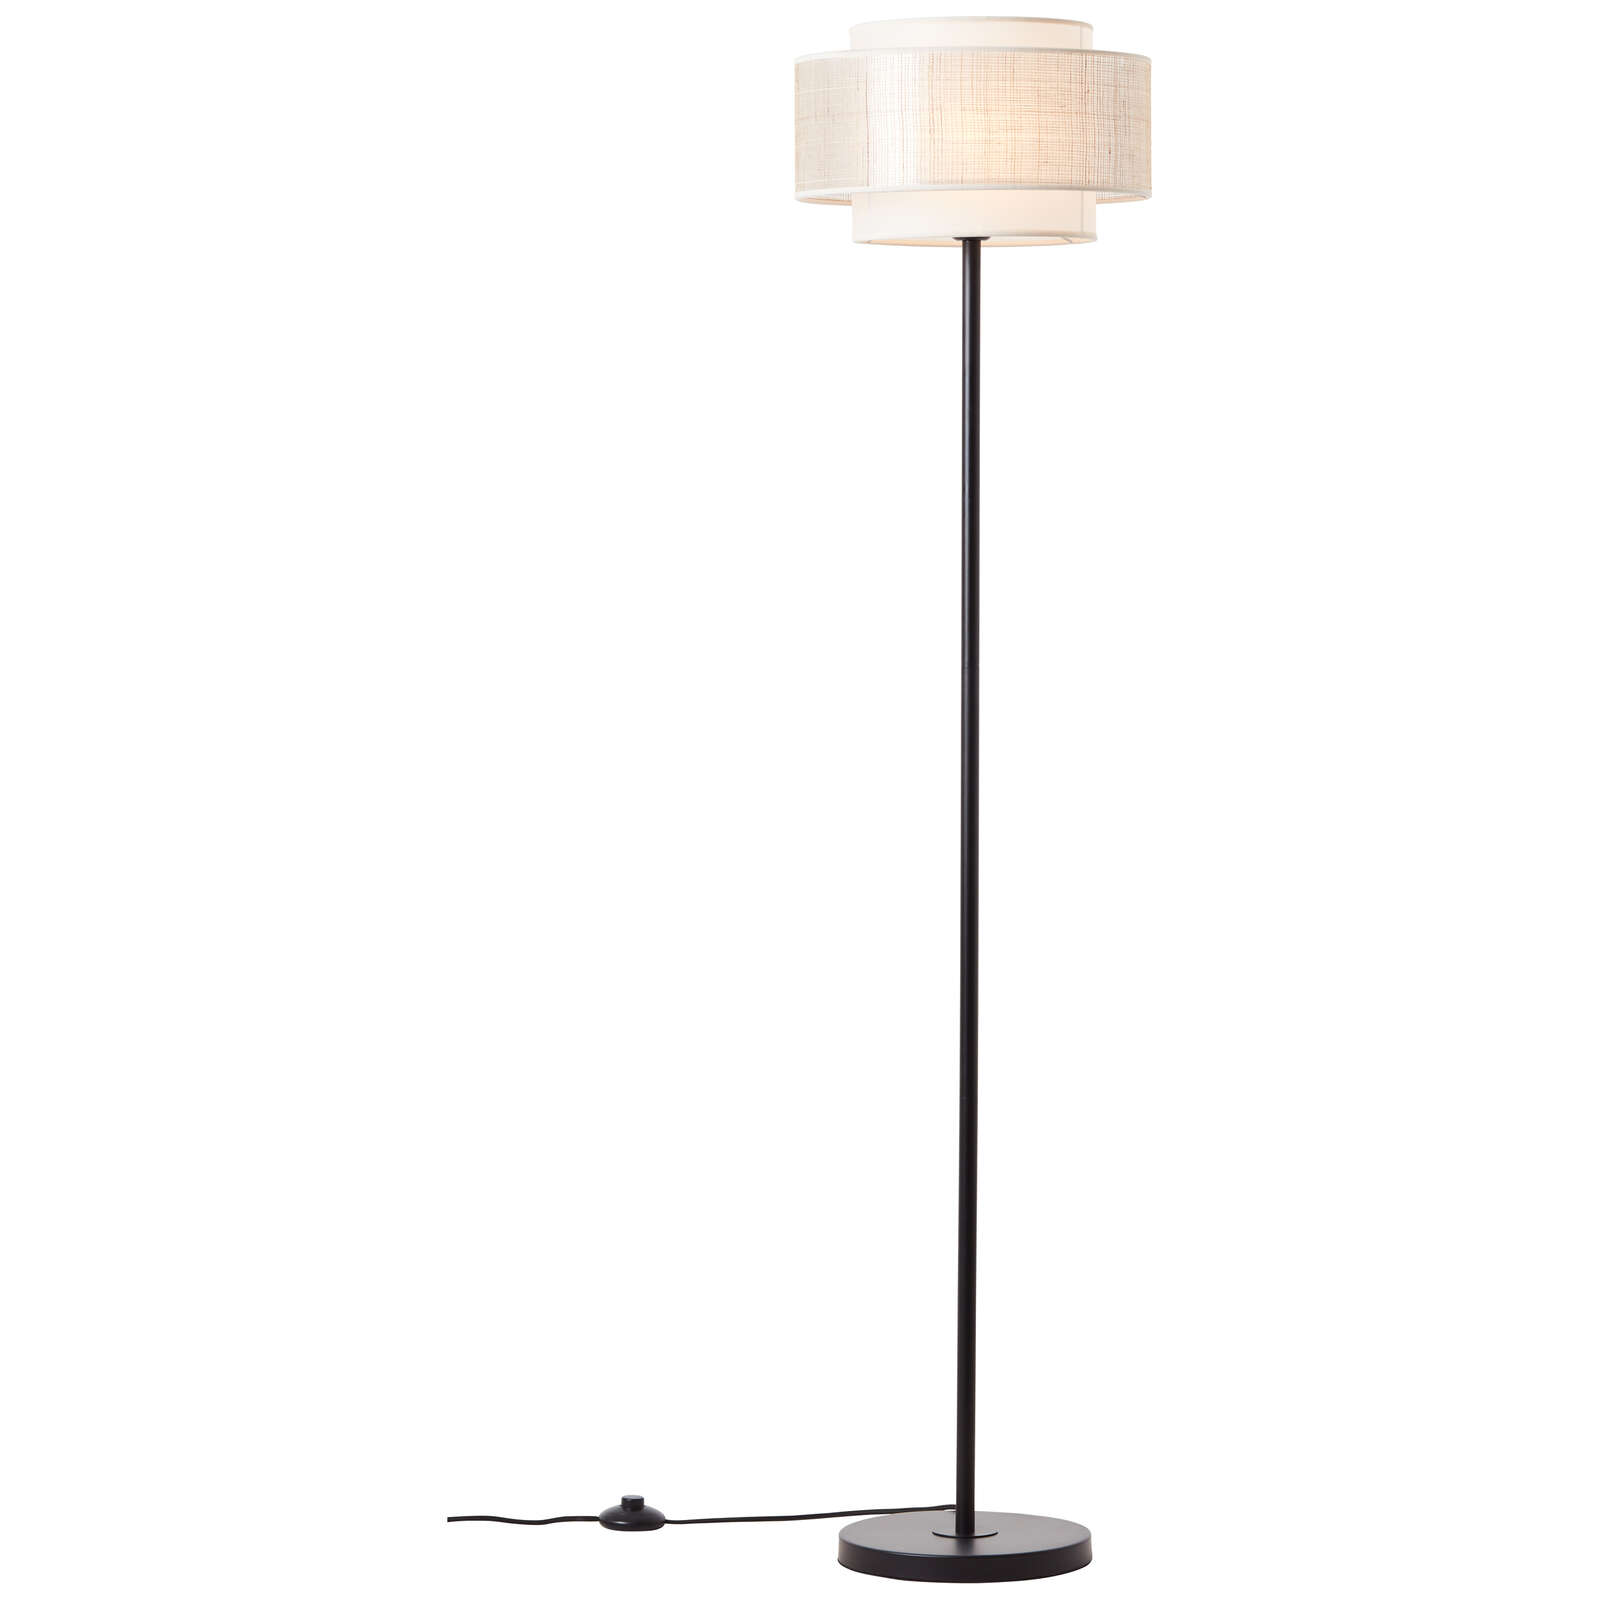             Floor lamp made of textile - Madita 2 - Brown
        